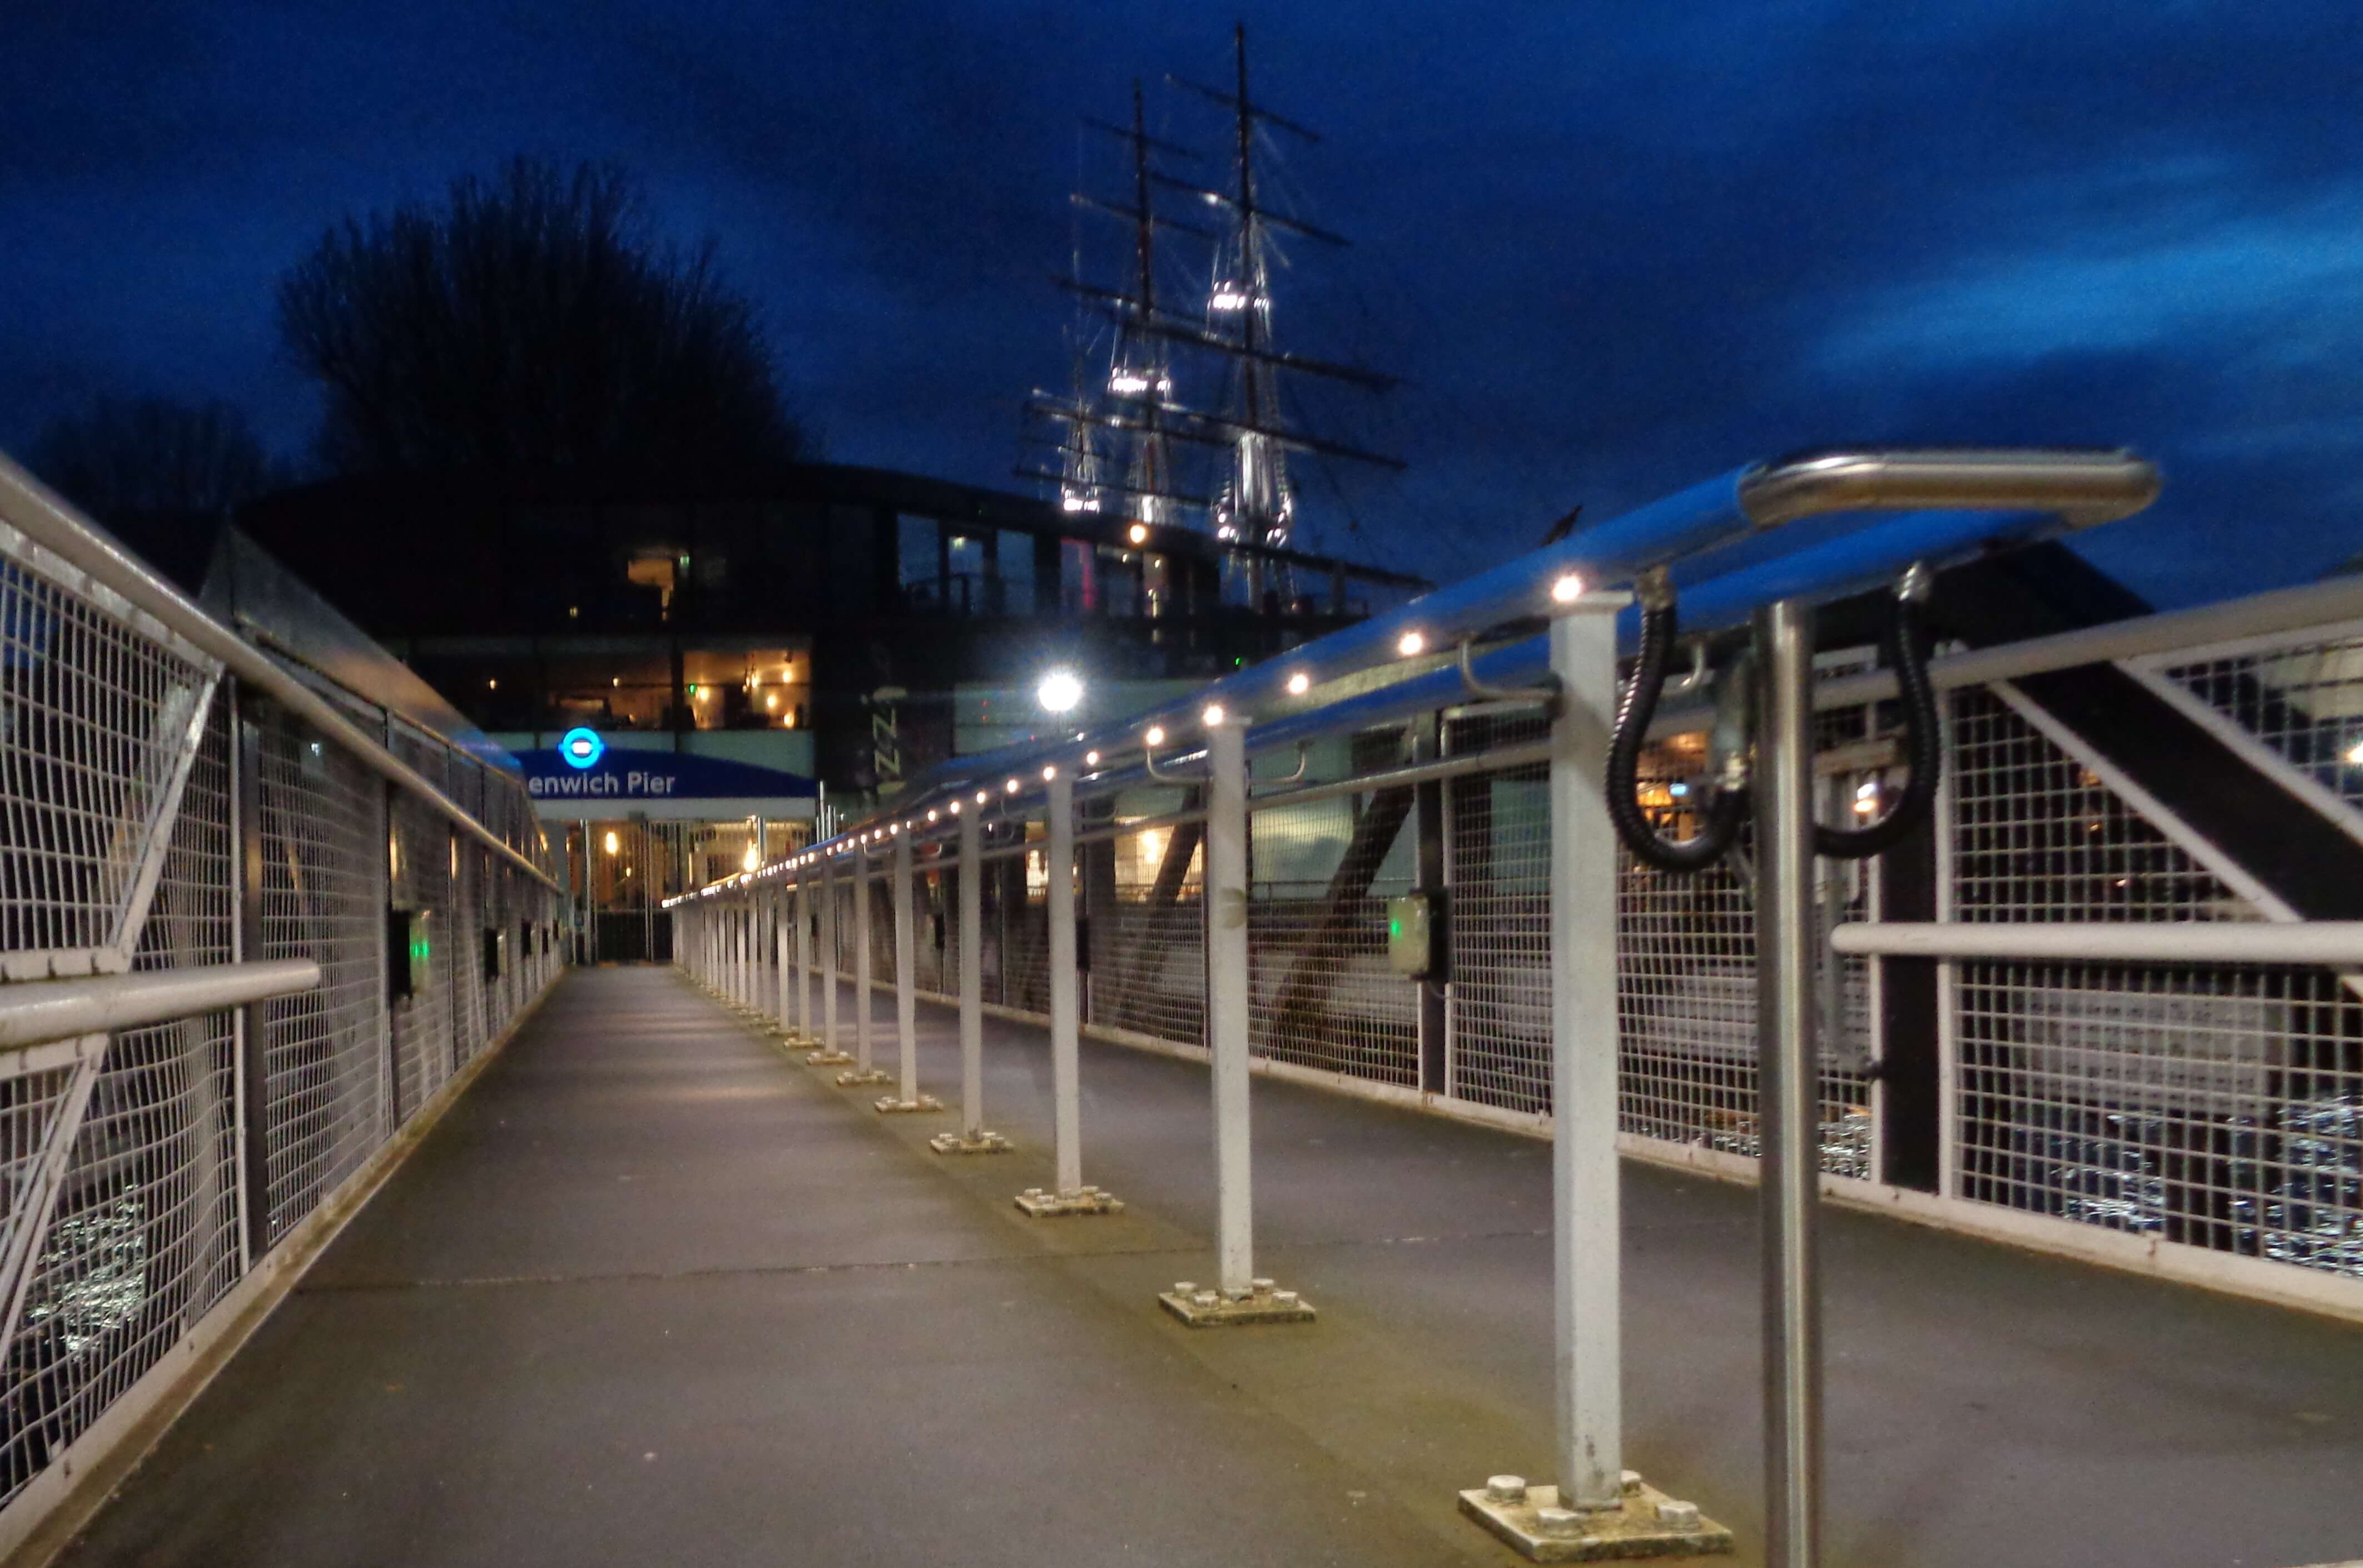 Illuminated handrail in Greenwich